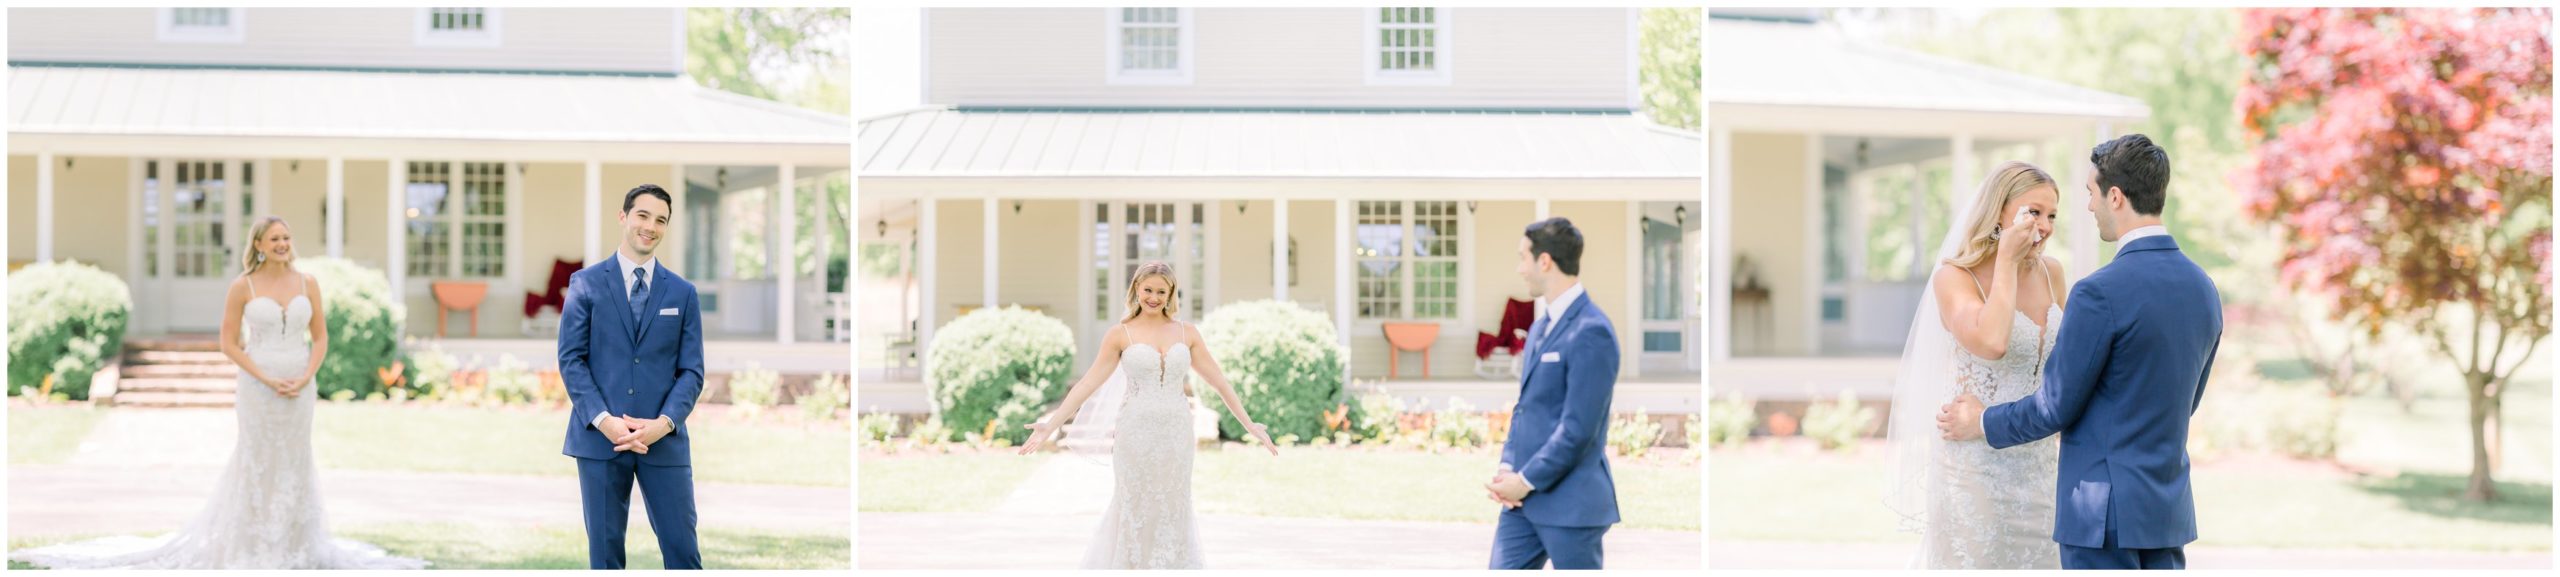 marblegate farm wedding venue highlight by alyssa rachelle photography